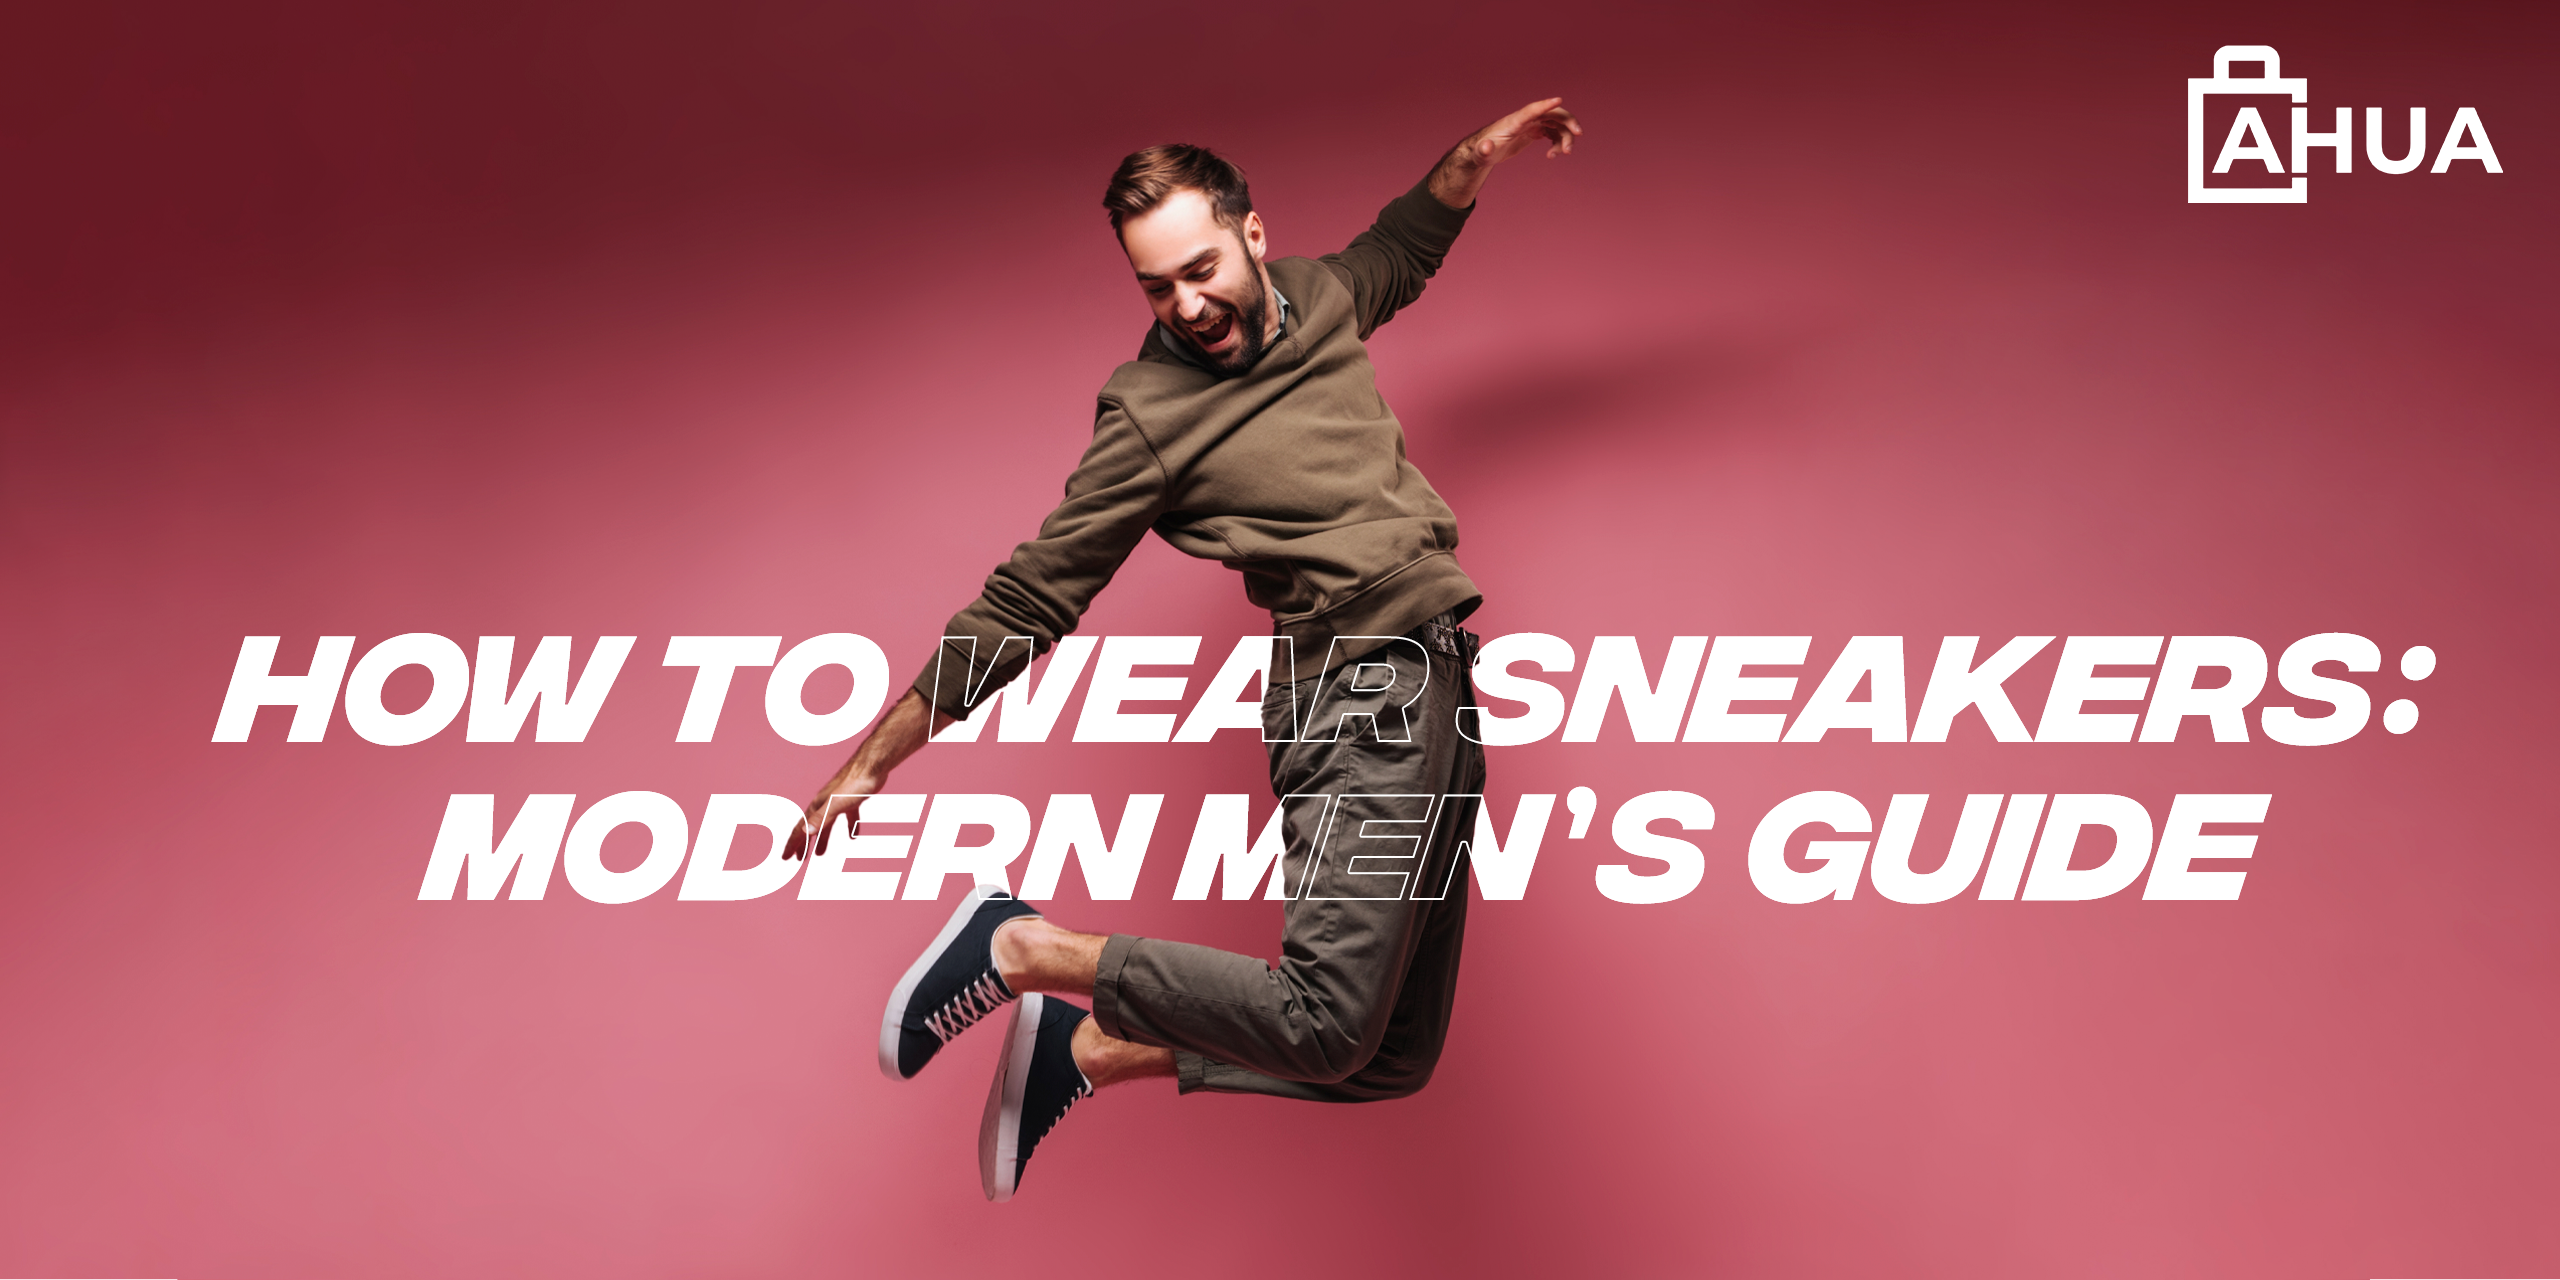 How to Wear Sneakers: Modern Men’s Guide